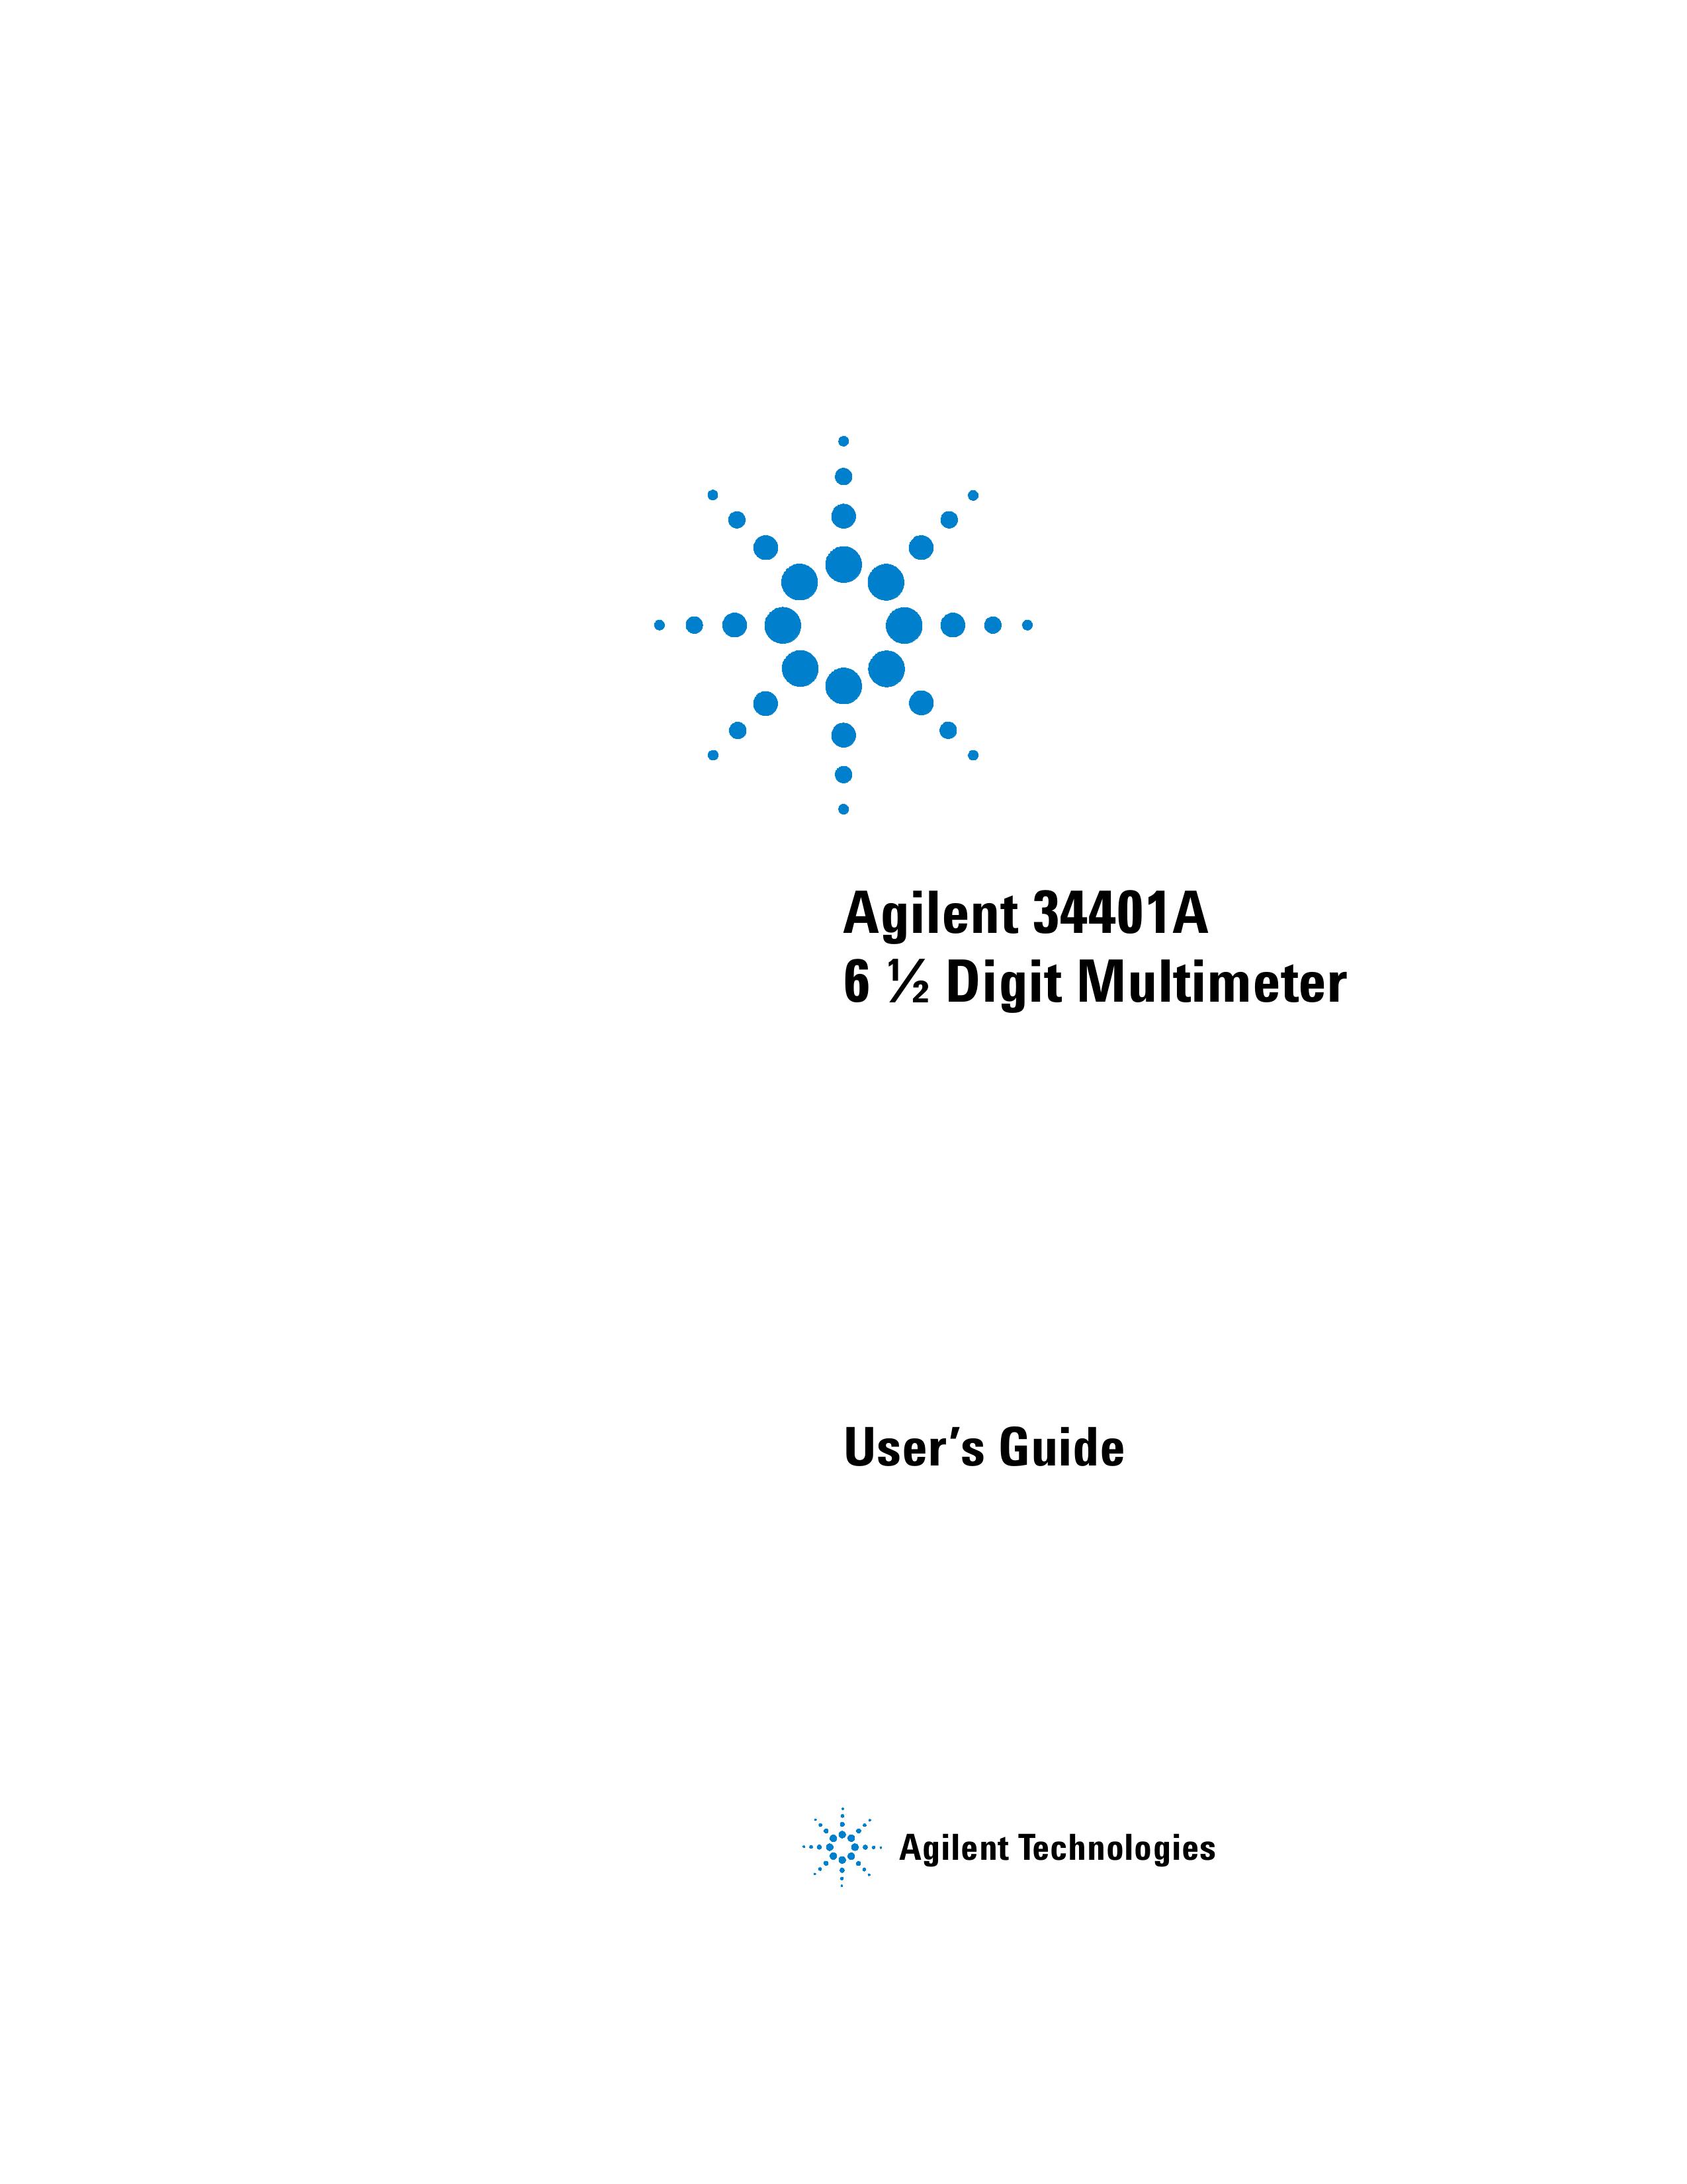 Agilent Technologies 34401A Camera Accessories User Manual